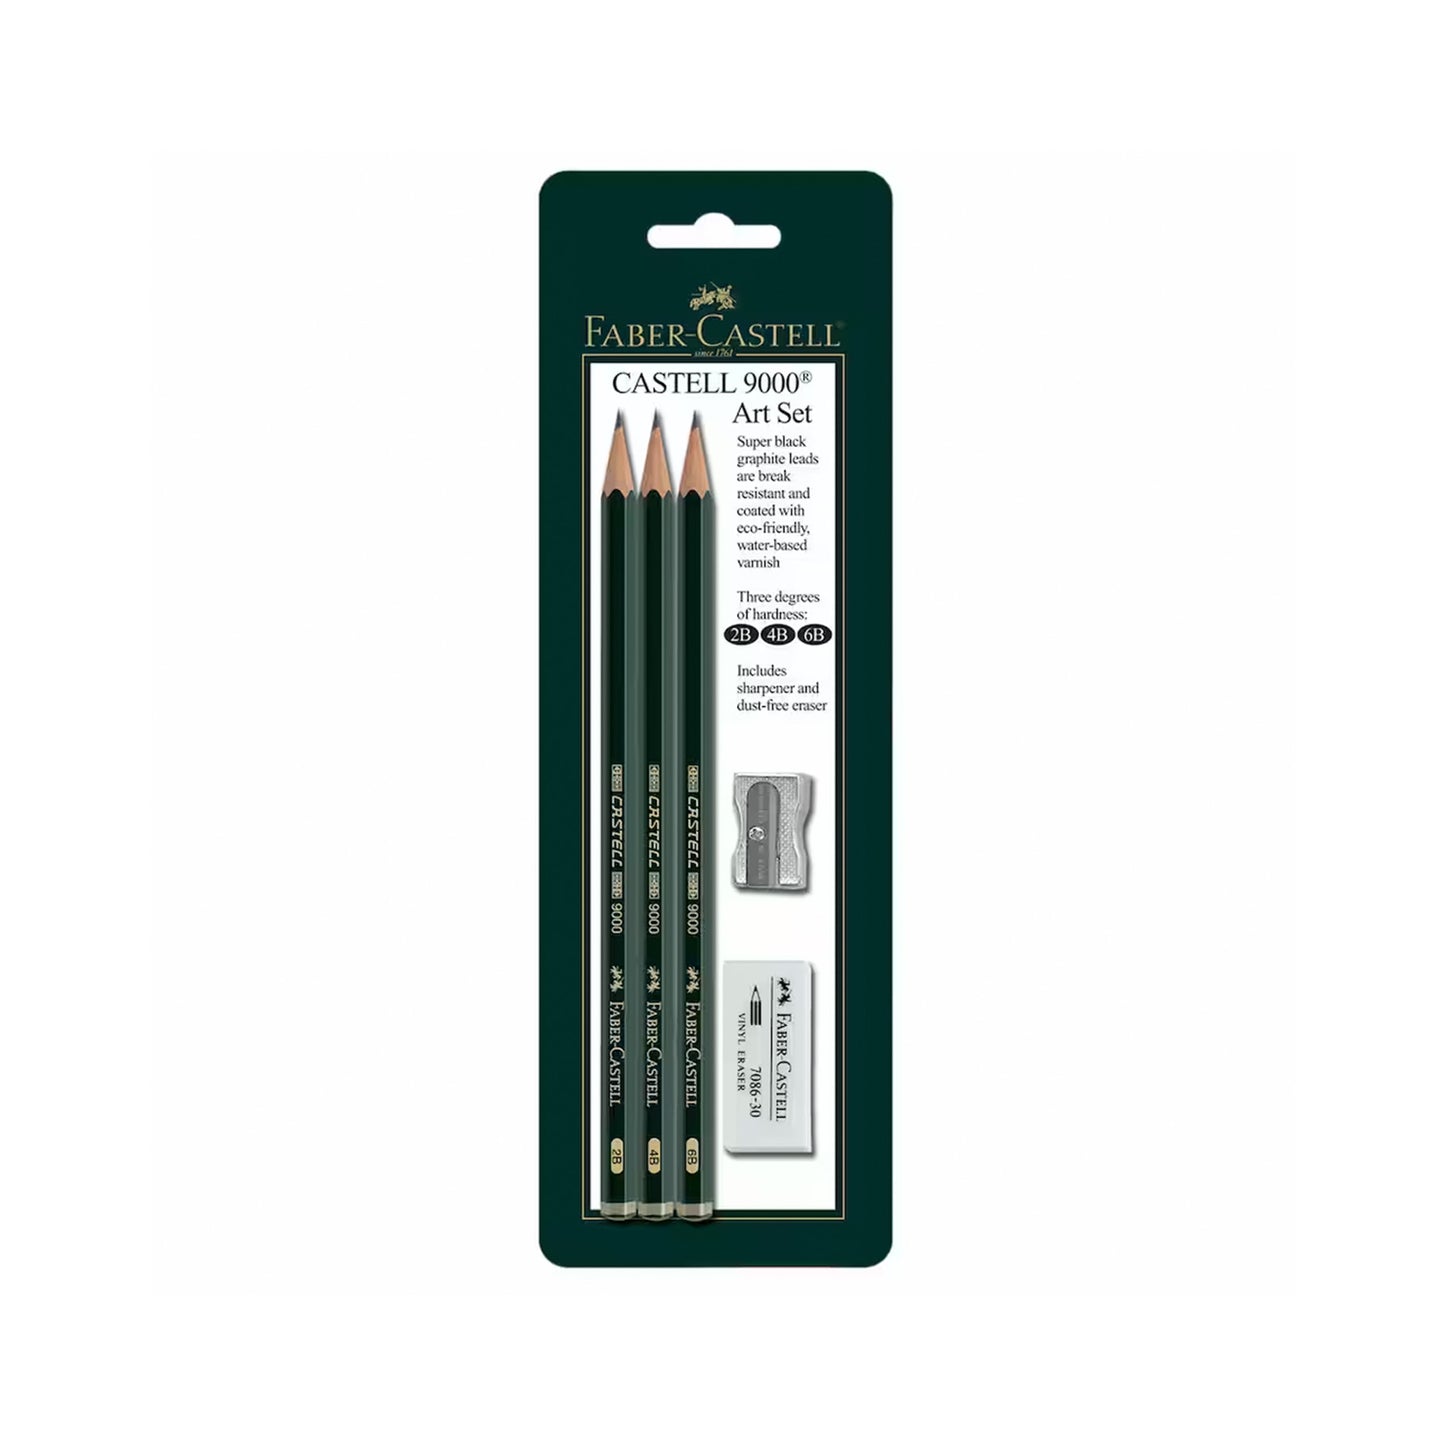 Faber Castell 9000 3 Pencil Set